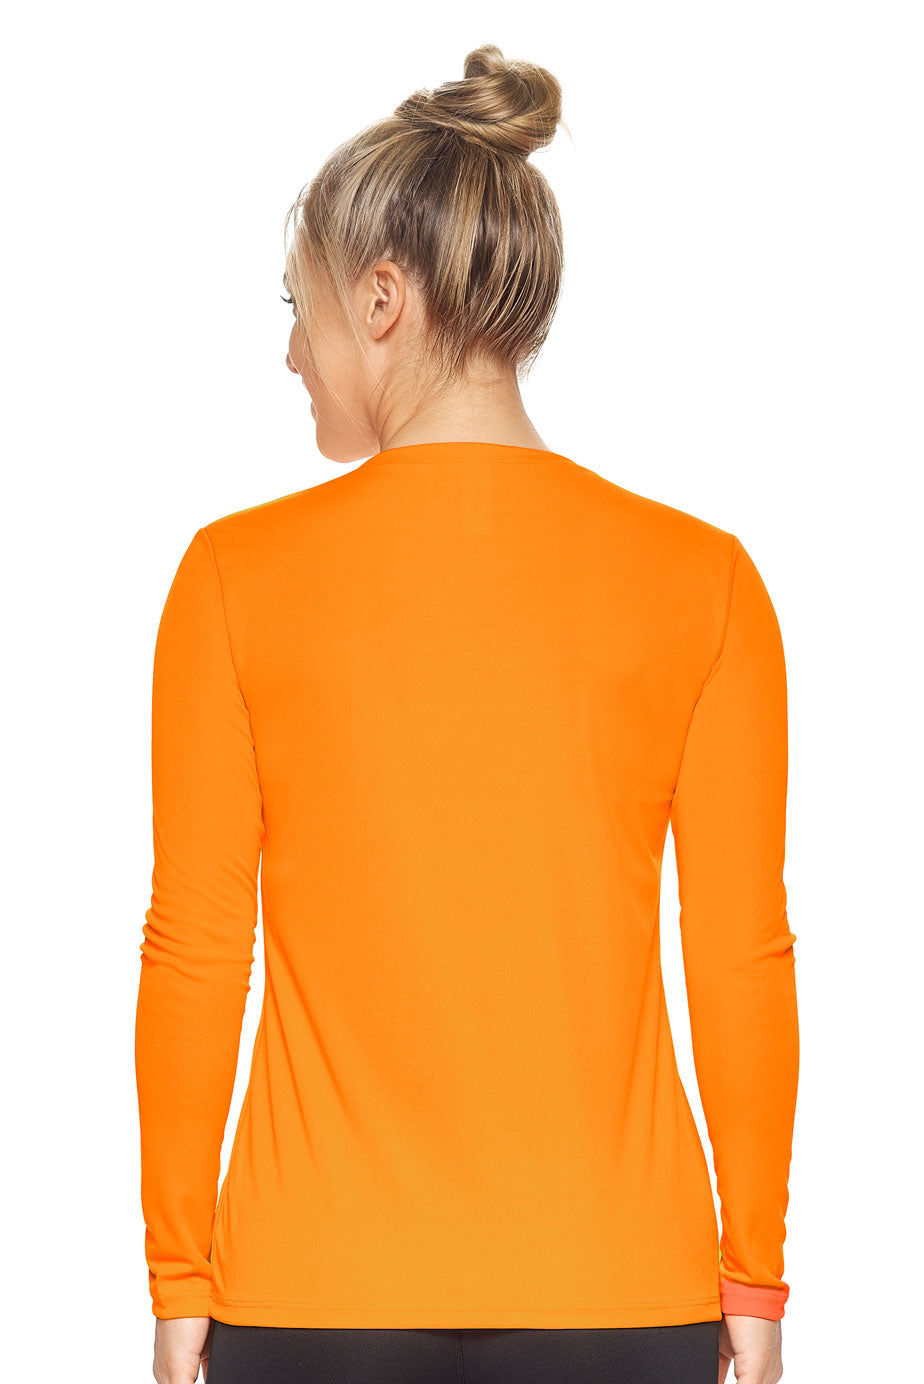 Expert Brand Wholesale Best Blanks Made in USA Activewear Performance DrimaX™ V-Neck Long Sleeve Expert Tee safety orange image 3#safety-orange